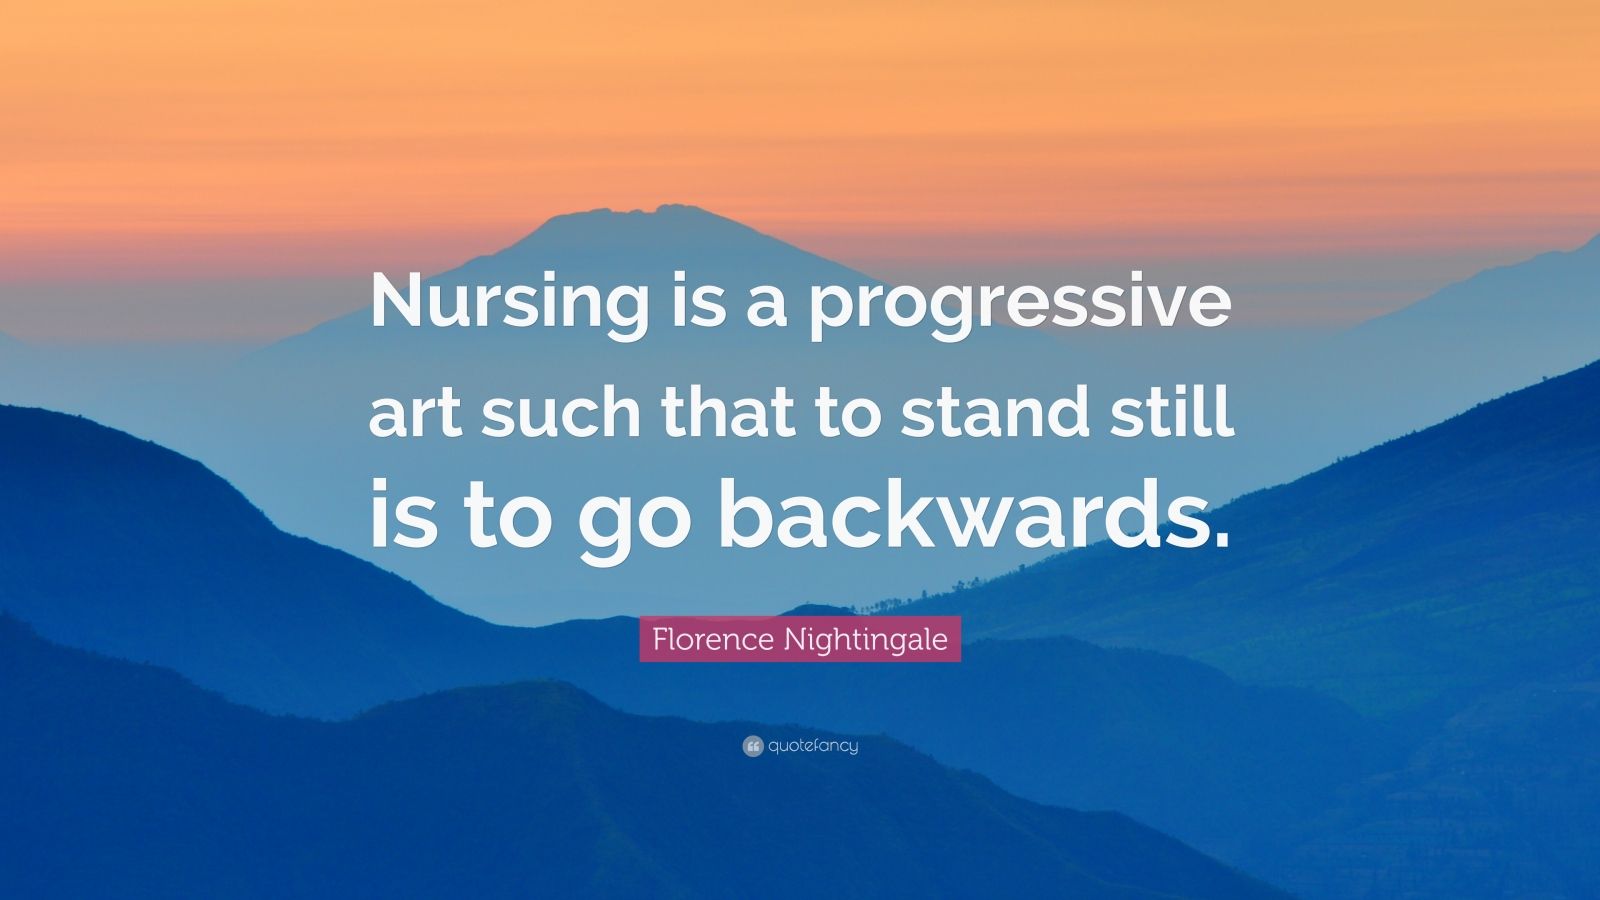 Florence Nightingale Quote “Nursing is a progressive art